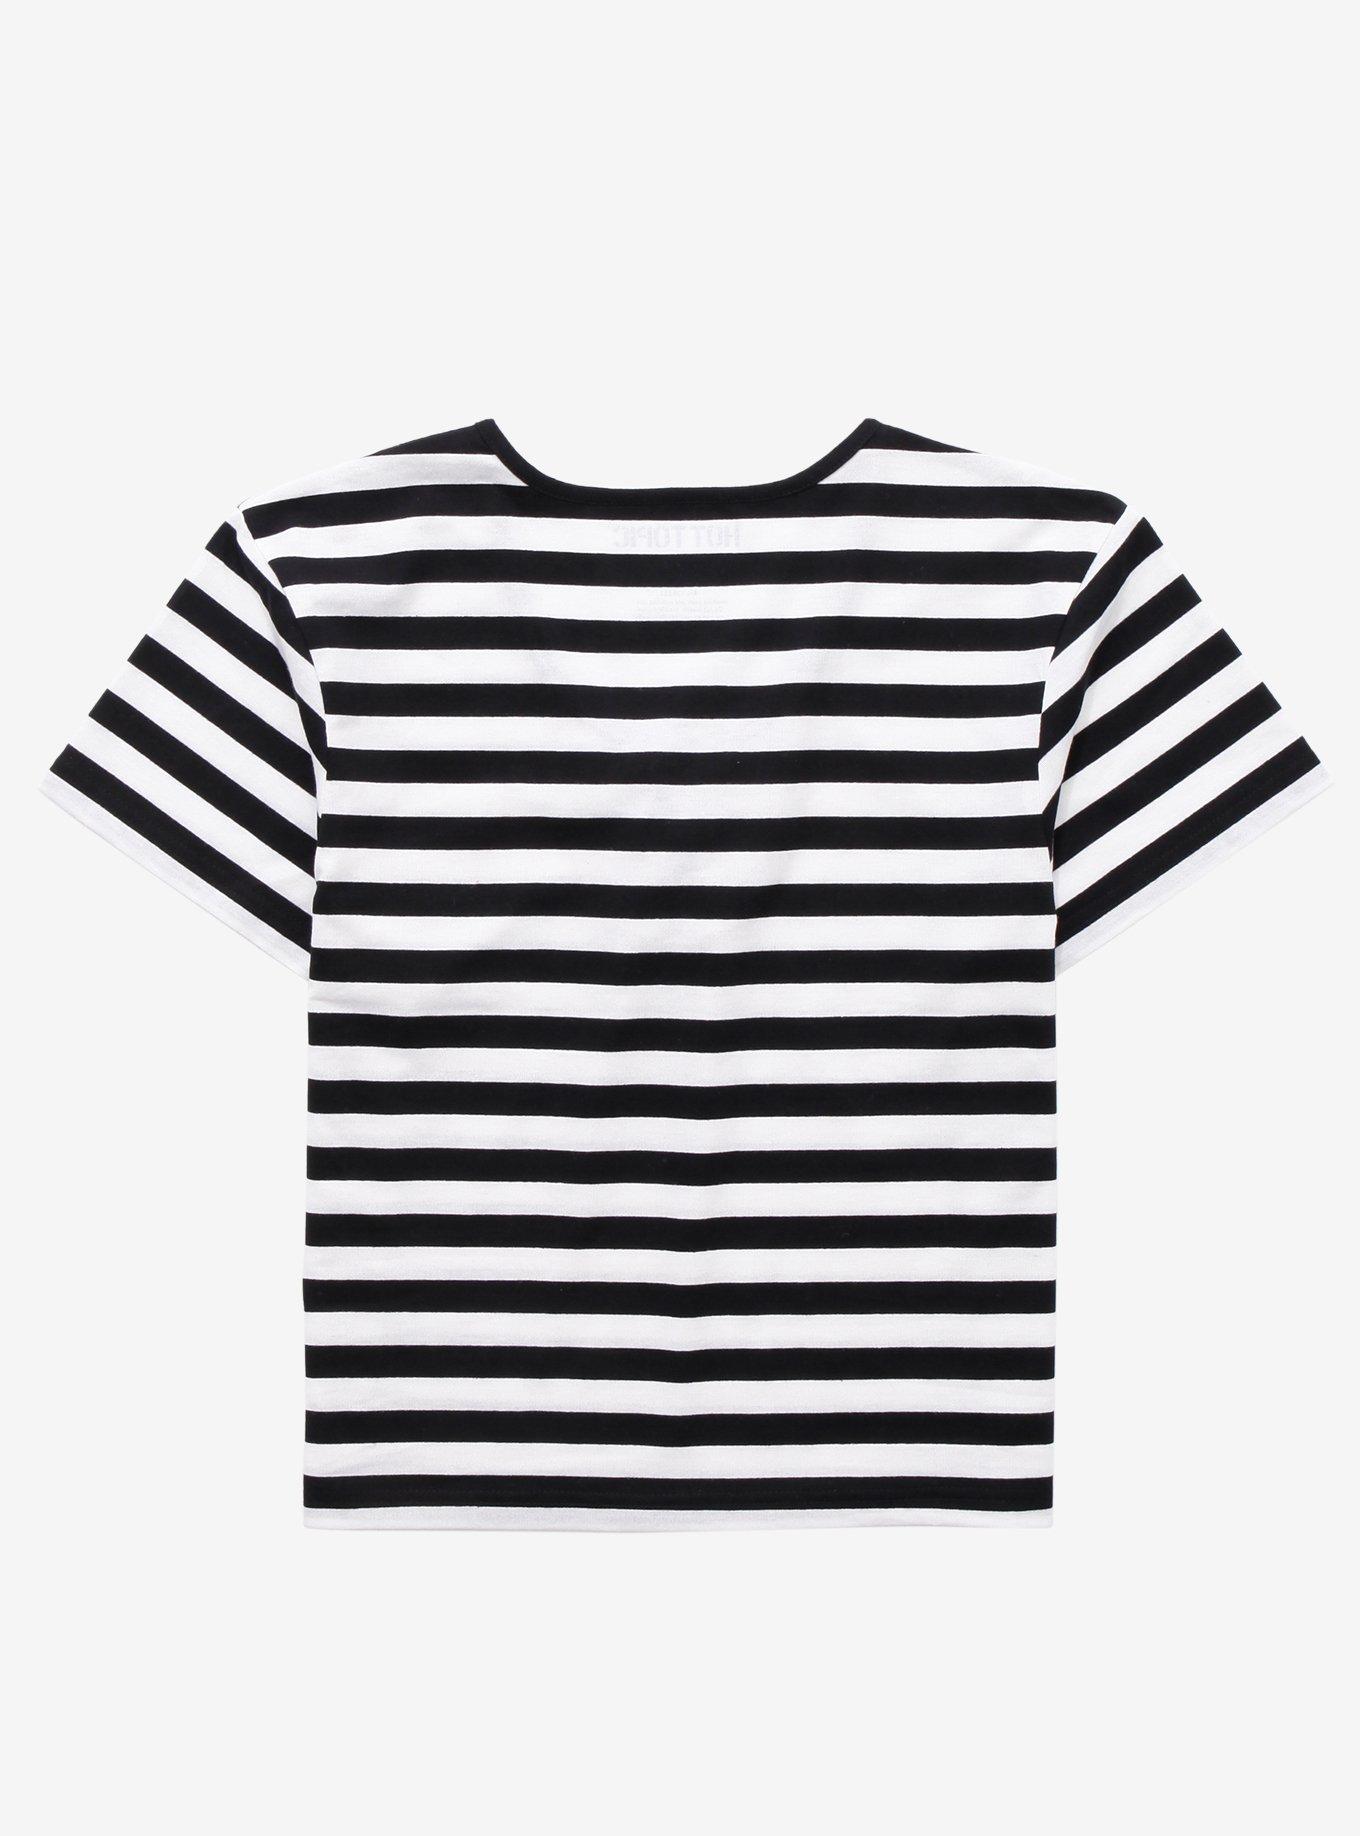 Black & White Stripe Lace-Up Girls Crop T-Shirt Plus Size, STRIPES, alternate